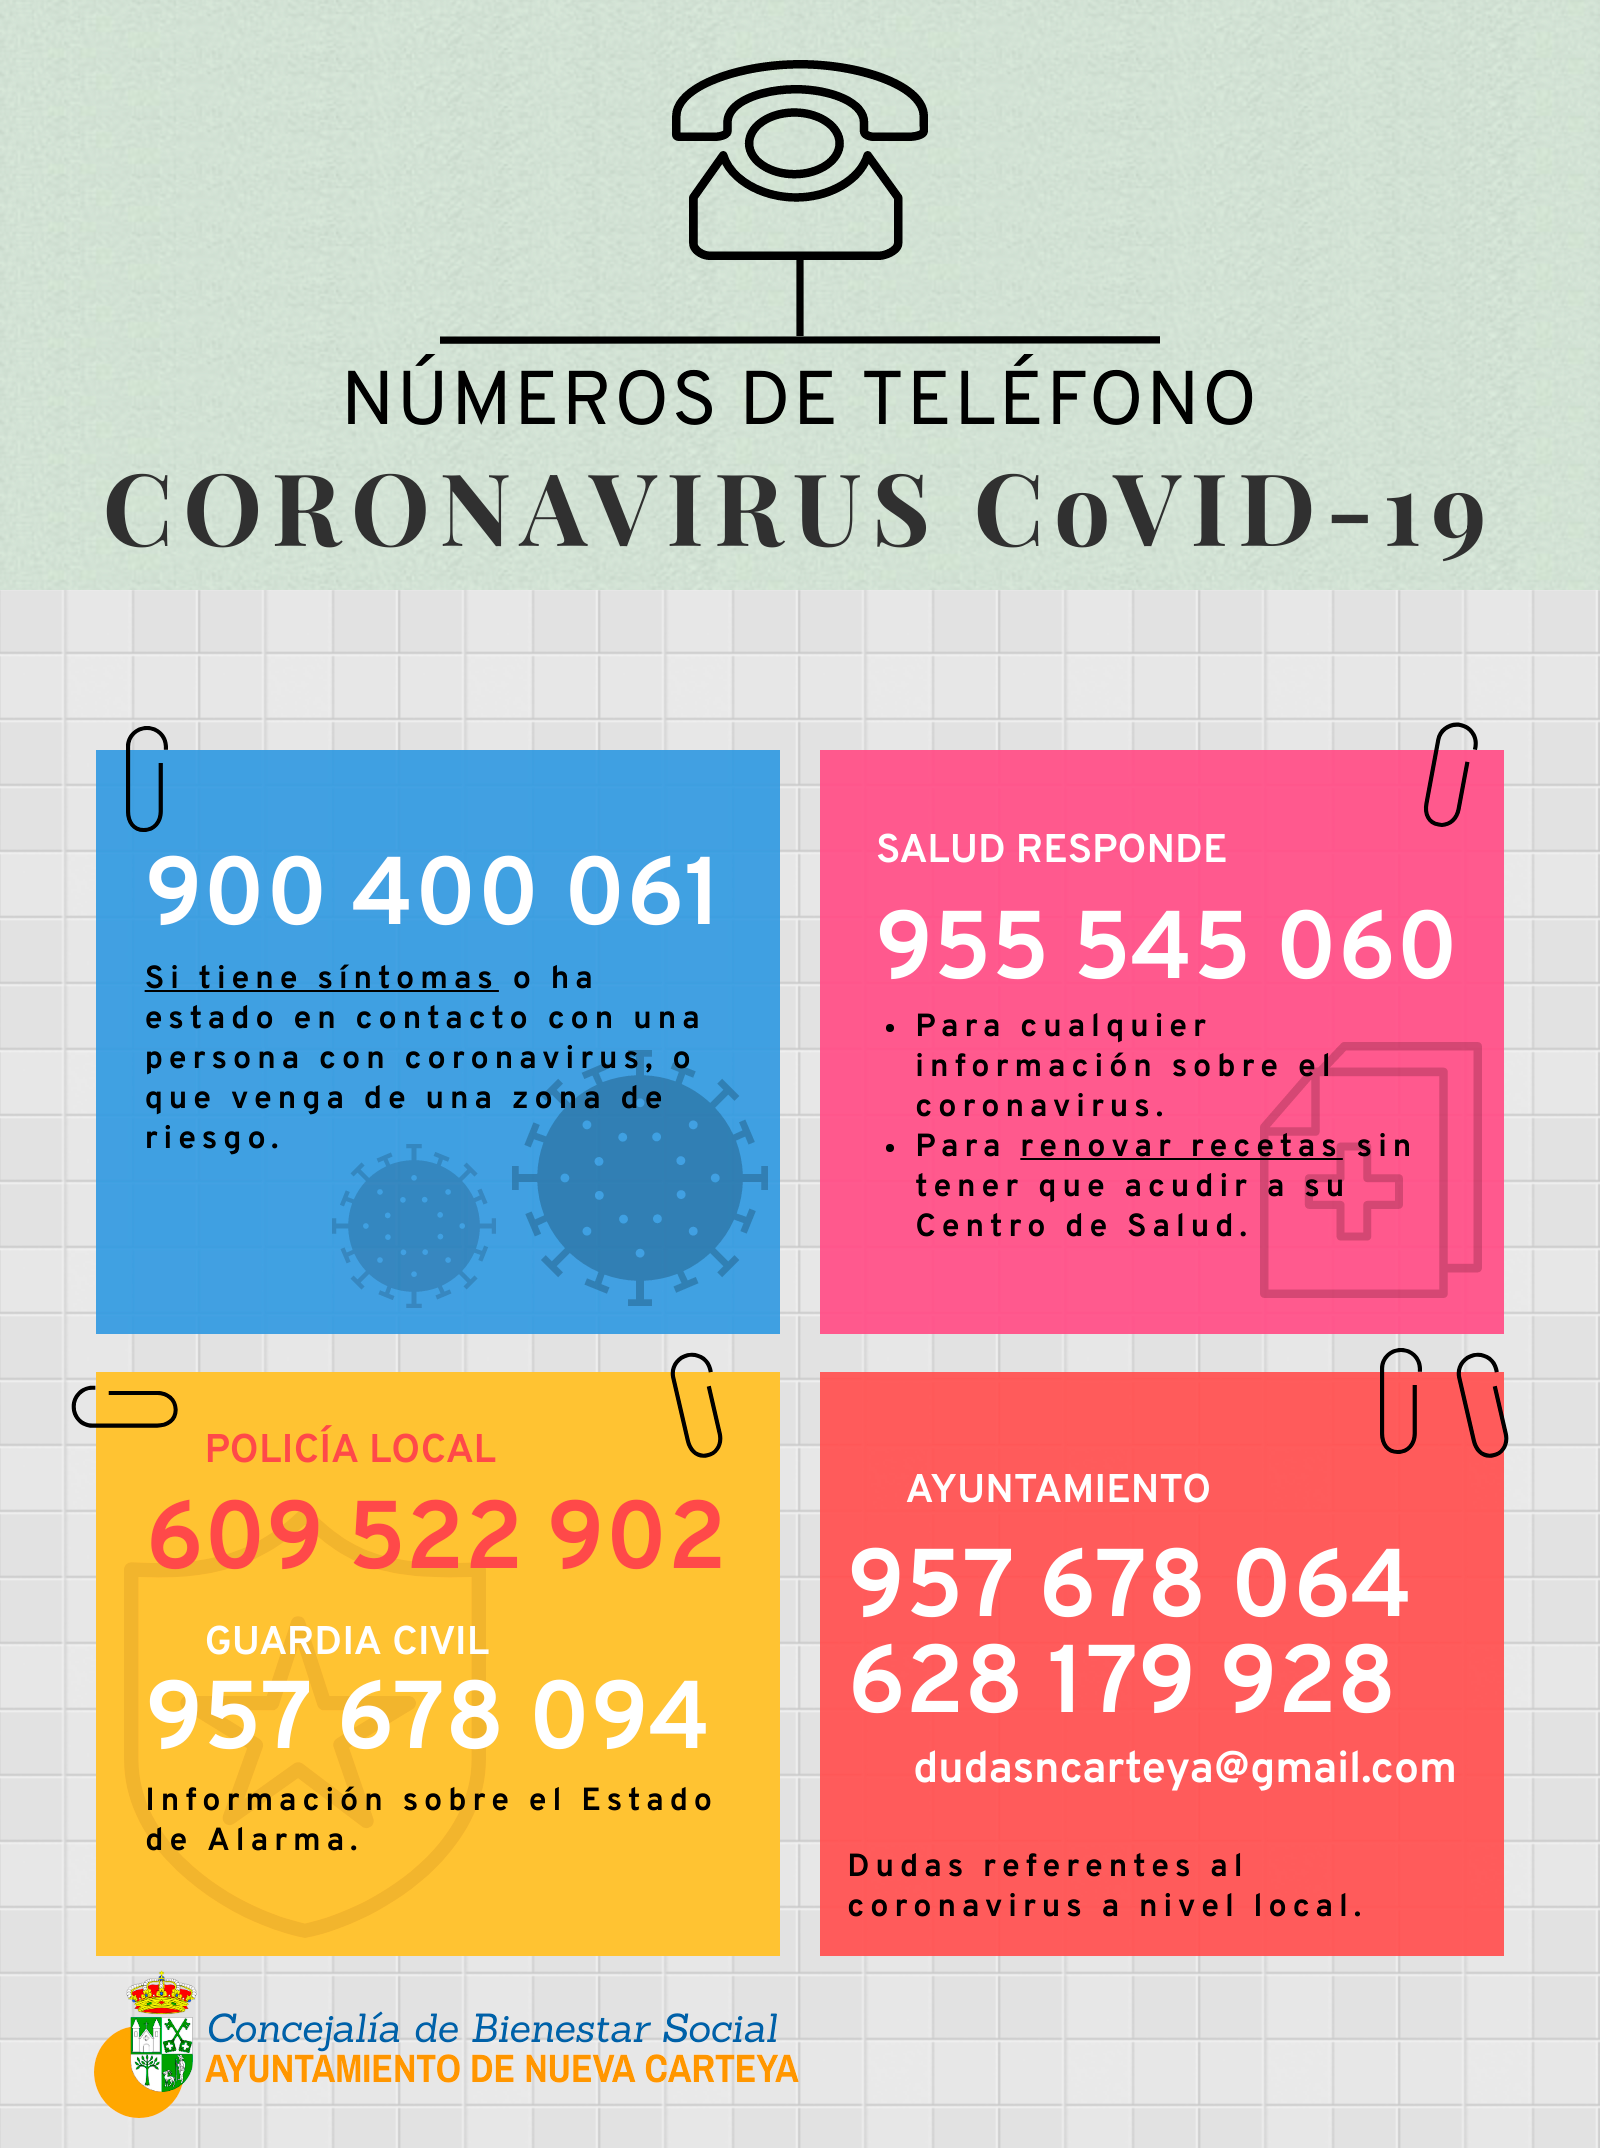 telfonos nueva carteya coronavirus 2020